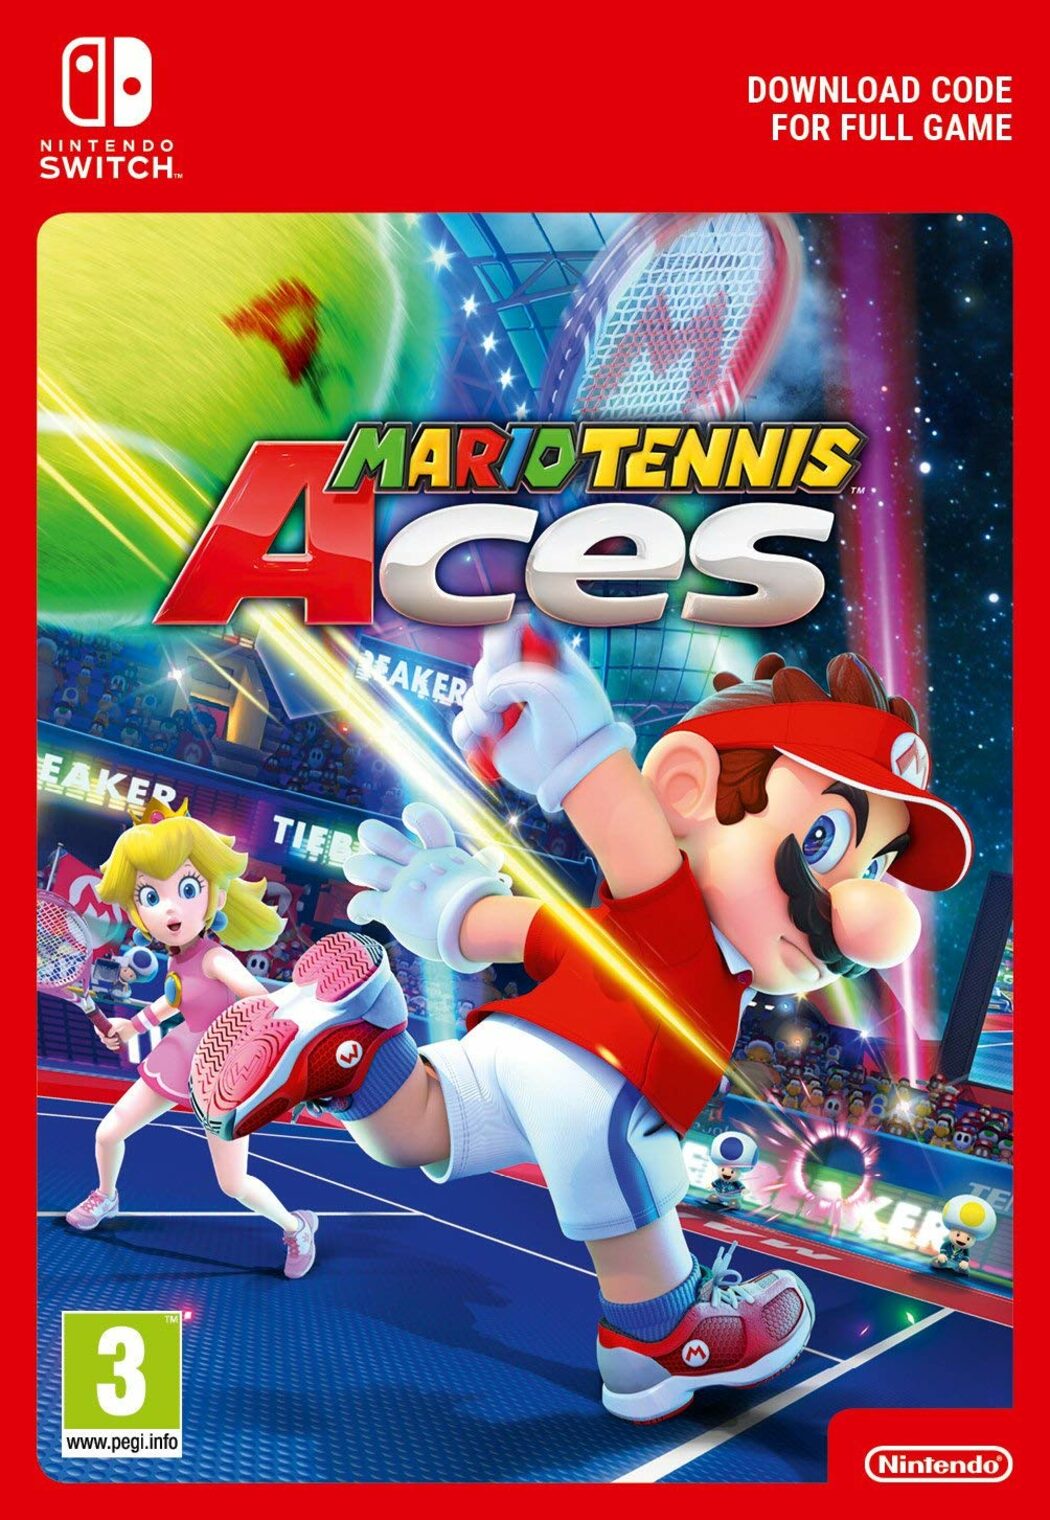 Switch Mario Tennis Nintendo ENEBA for Aces | key Buy Cheaper